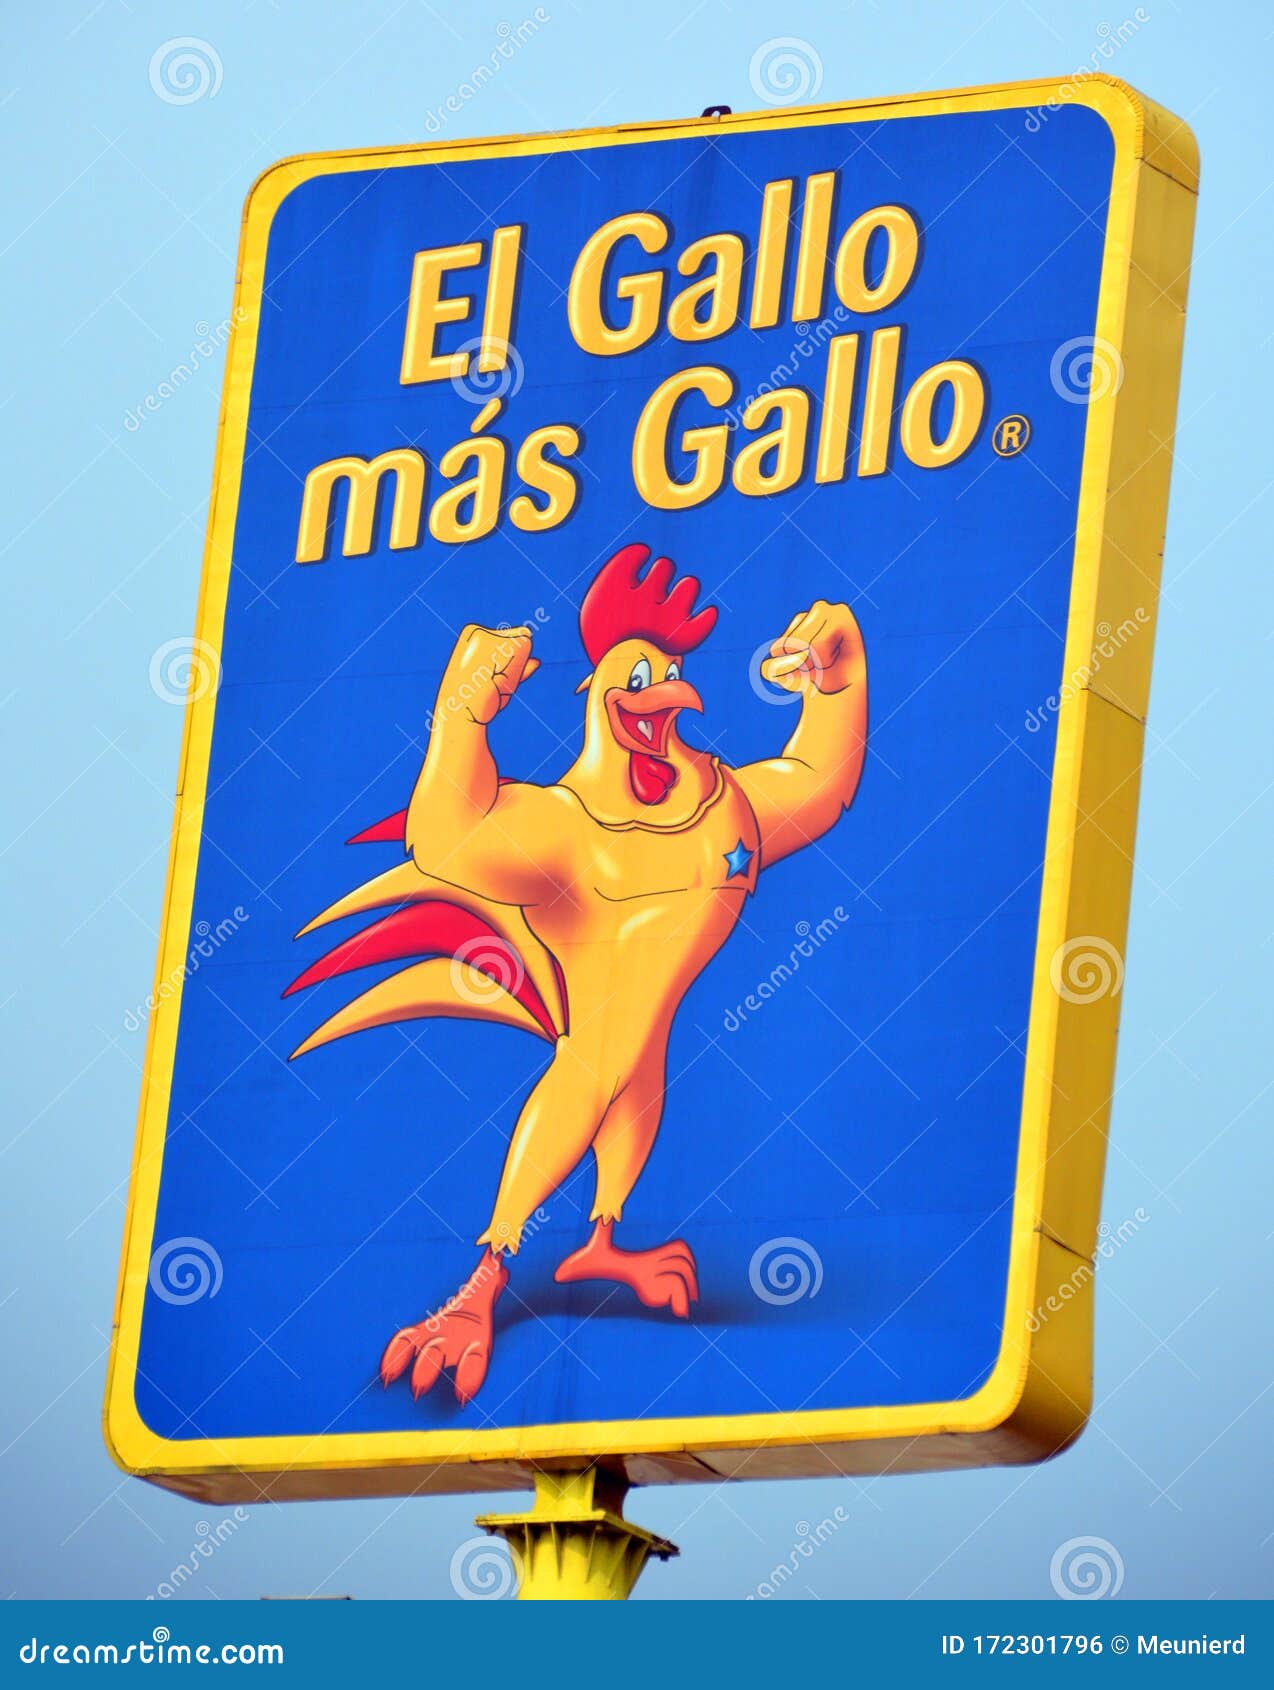 El Gallo Mas Gallo Electronic Sign, Editorial Photo - Image of audio,  chicken: 172301796